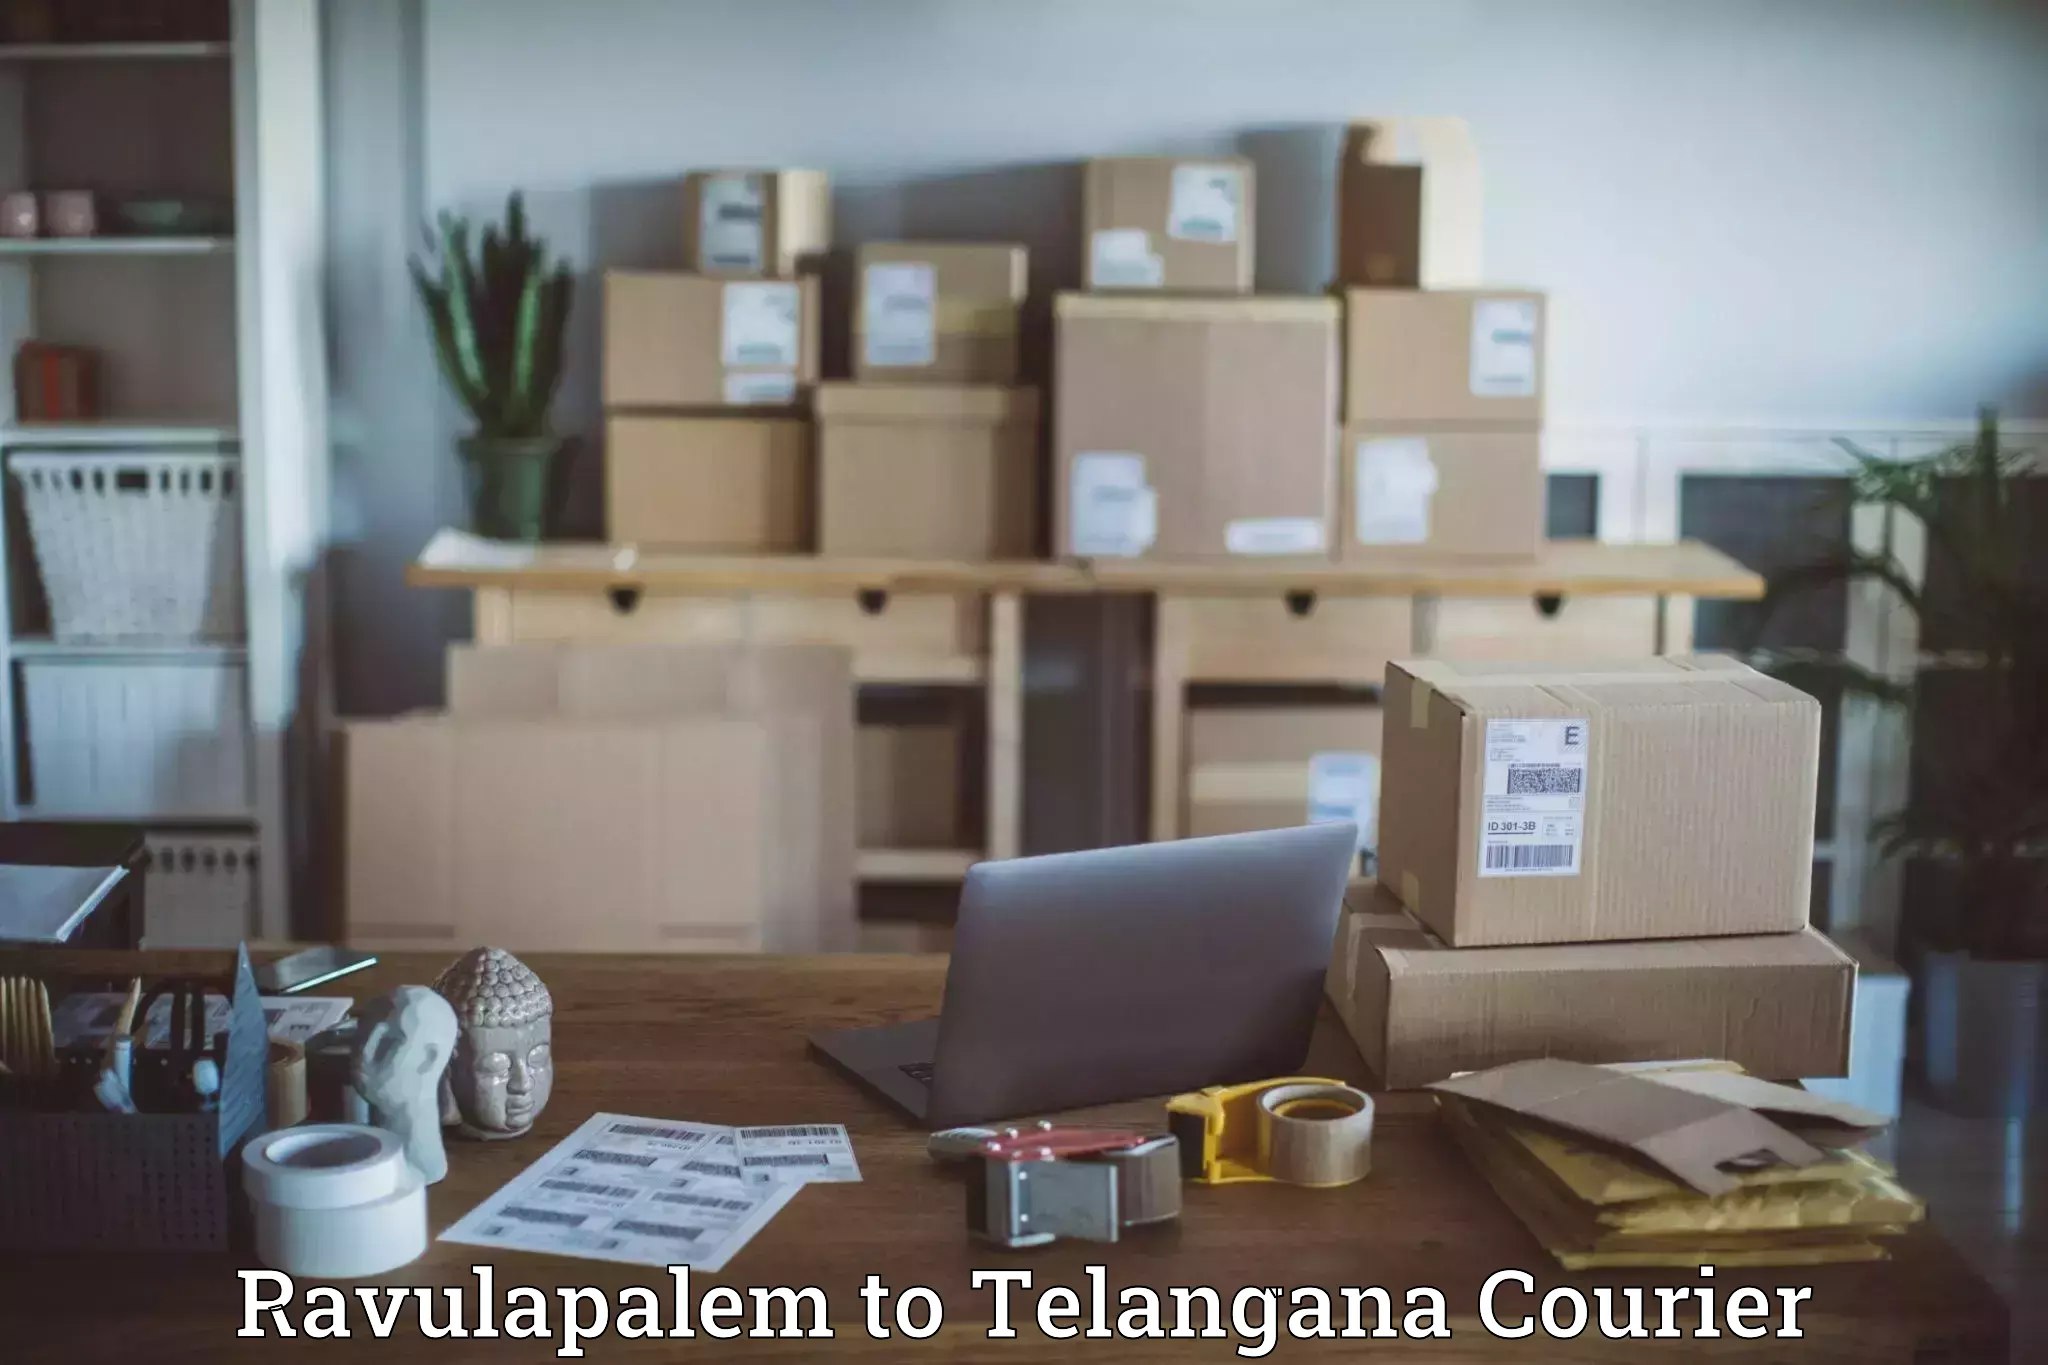 State-of-the-art courier technology Ravulapalem to Nalgonda